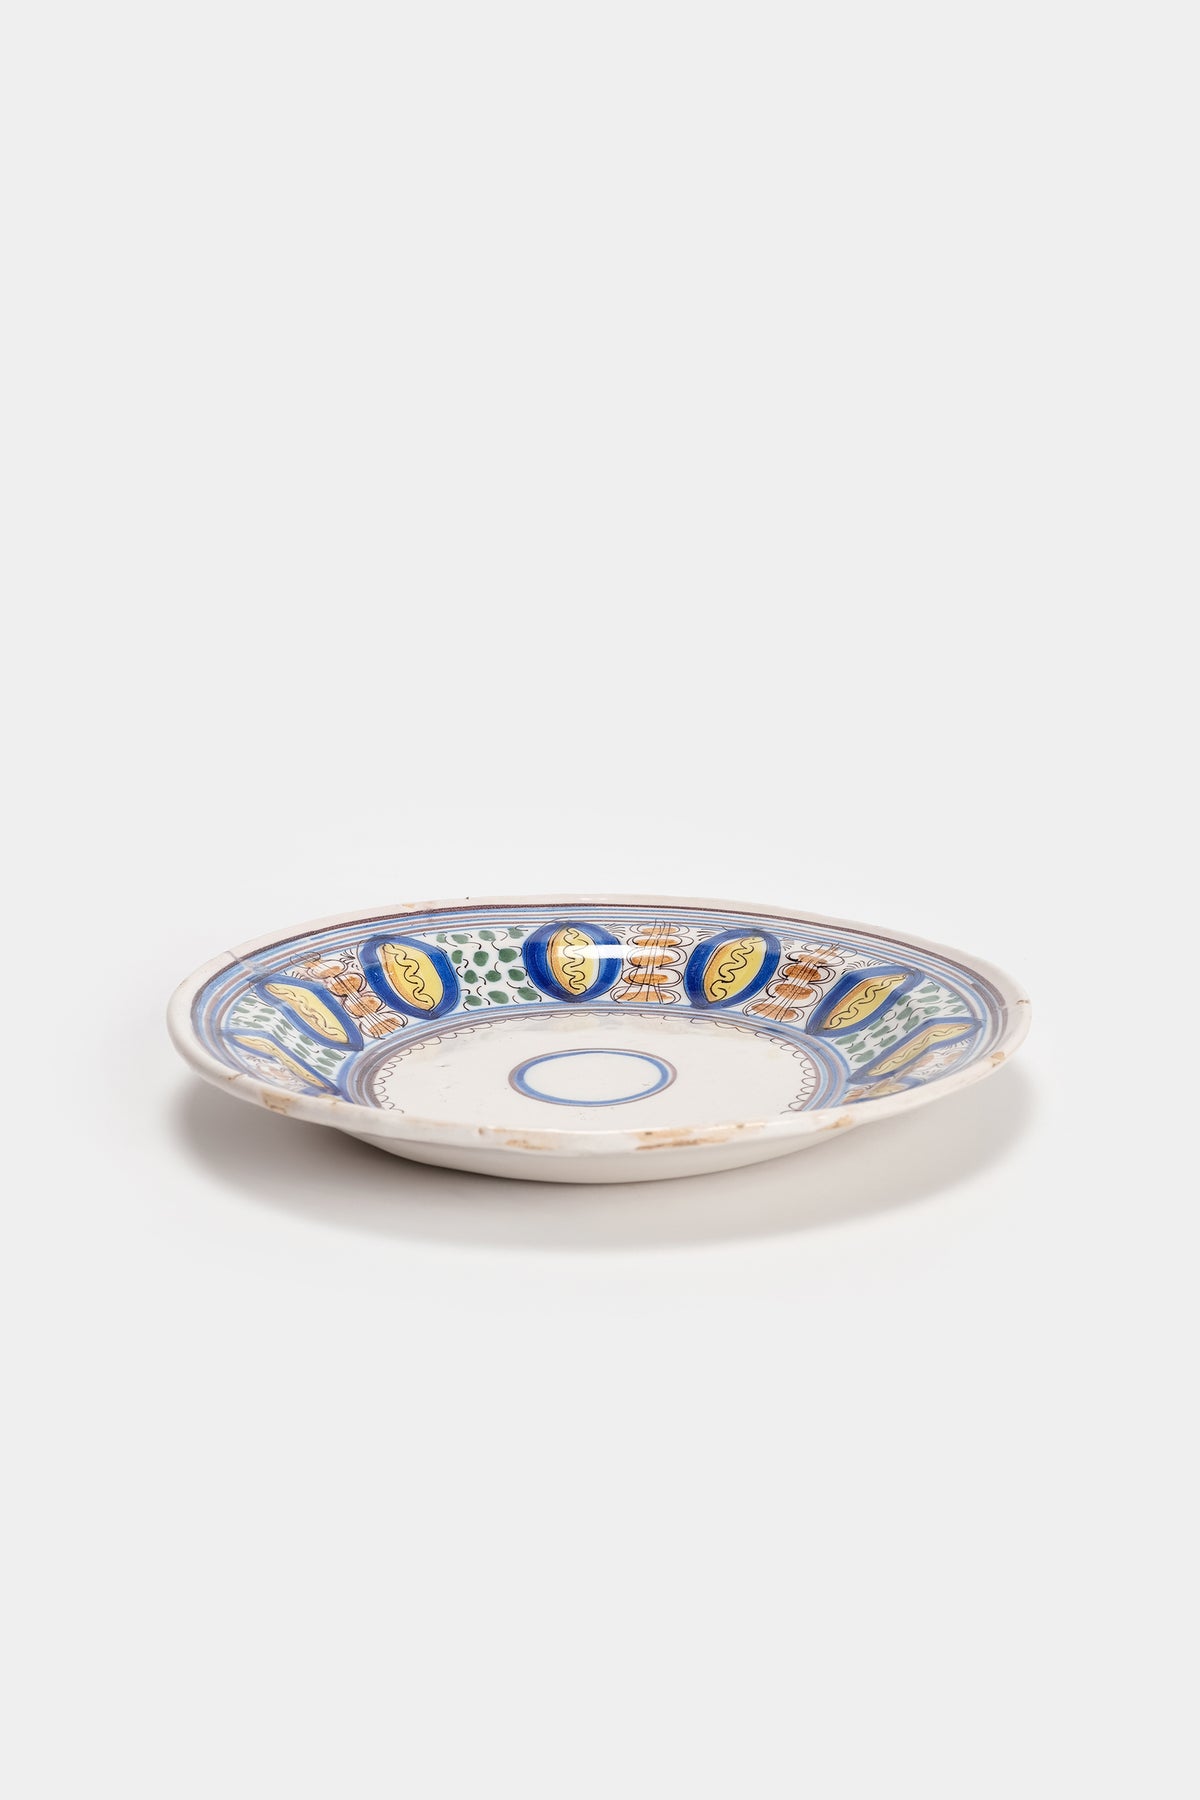 Big Plate, Manises Valencia Keramik, 20s